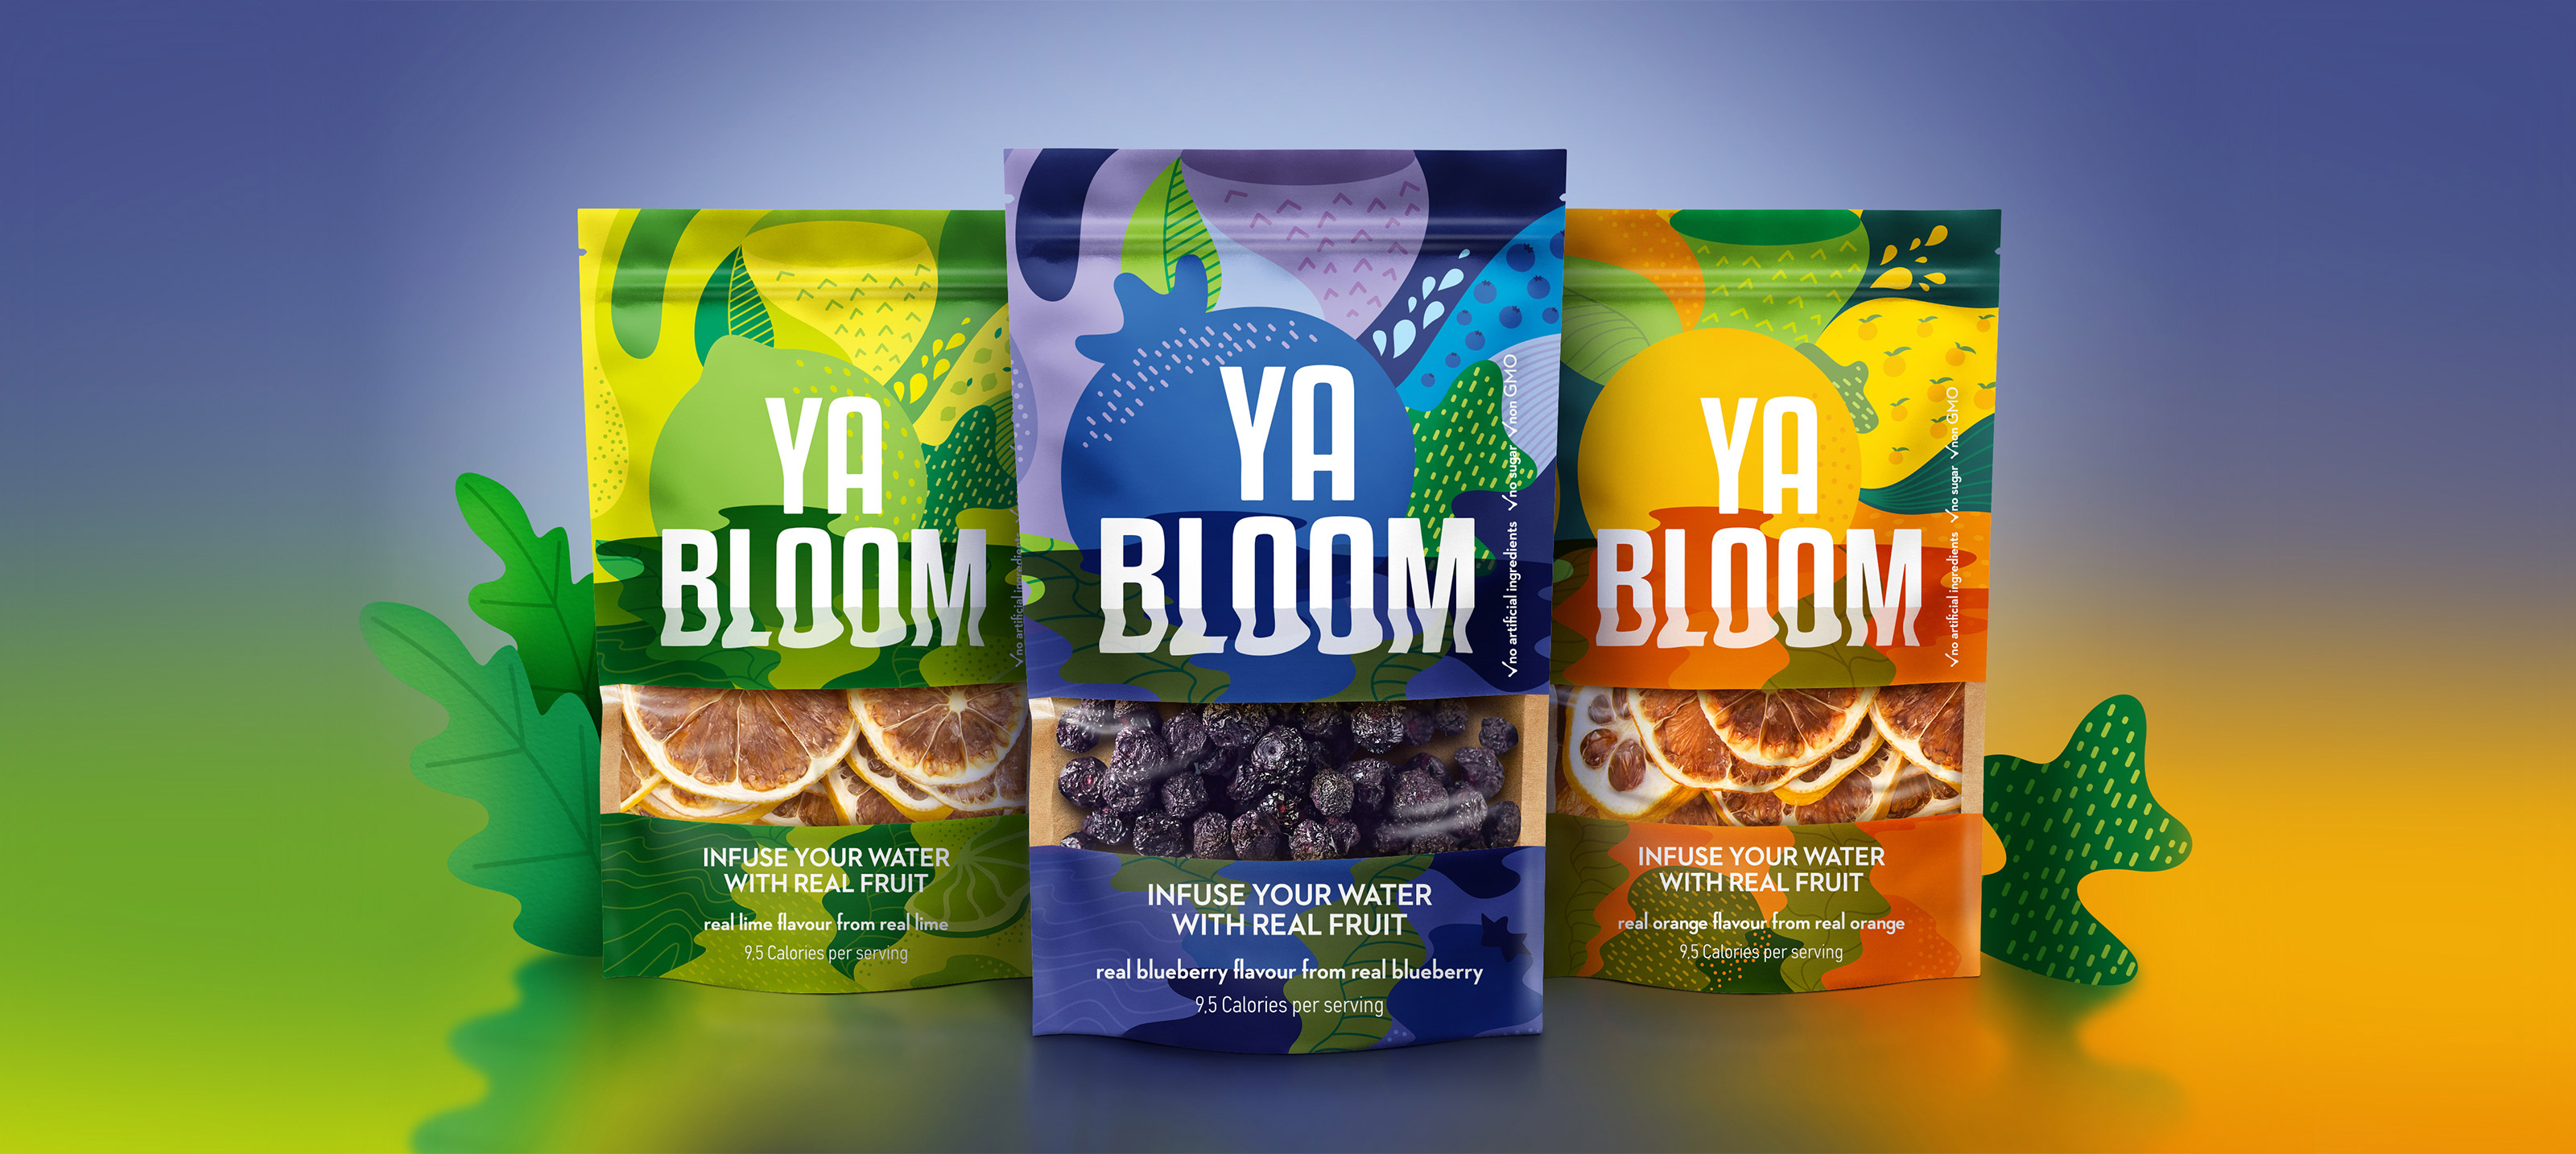 New Health Beverage Packaging Design for Yabloom Infused Water